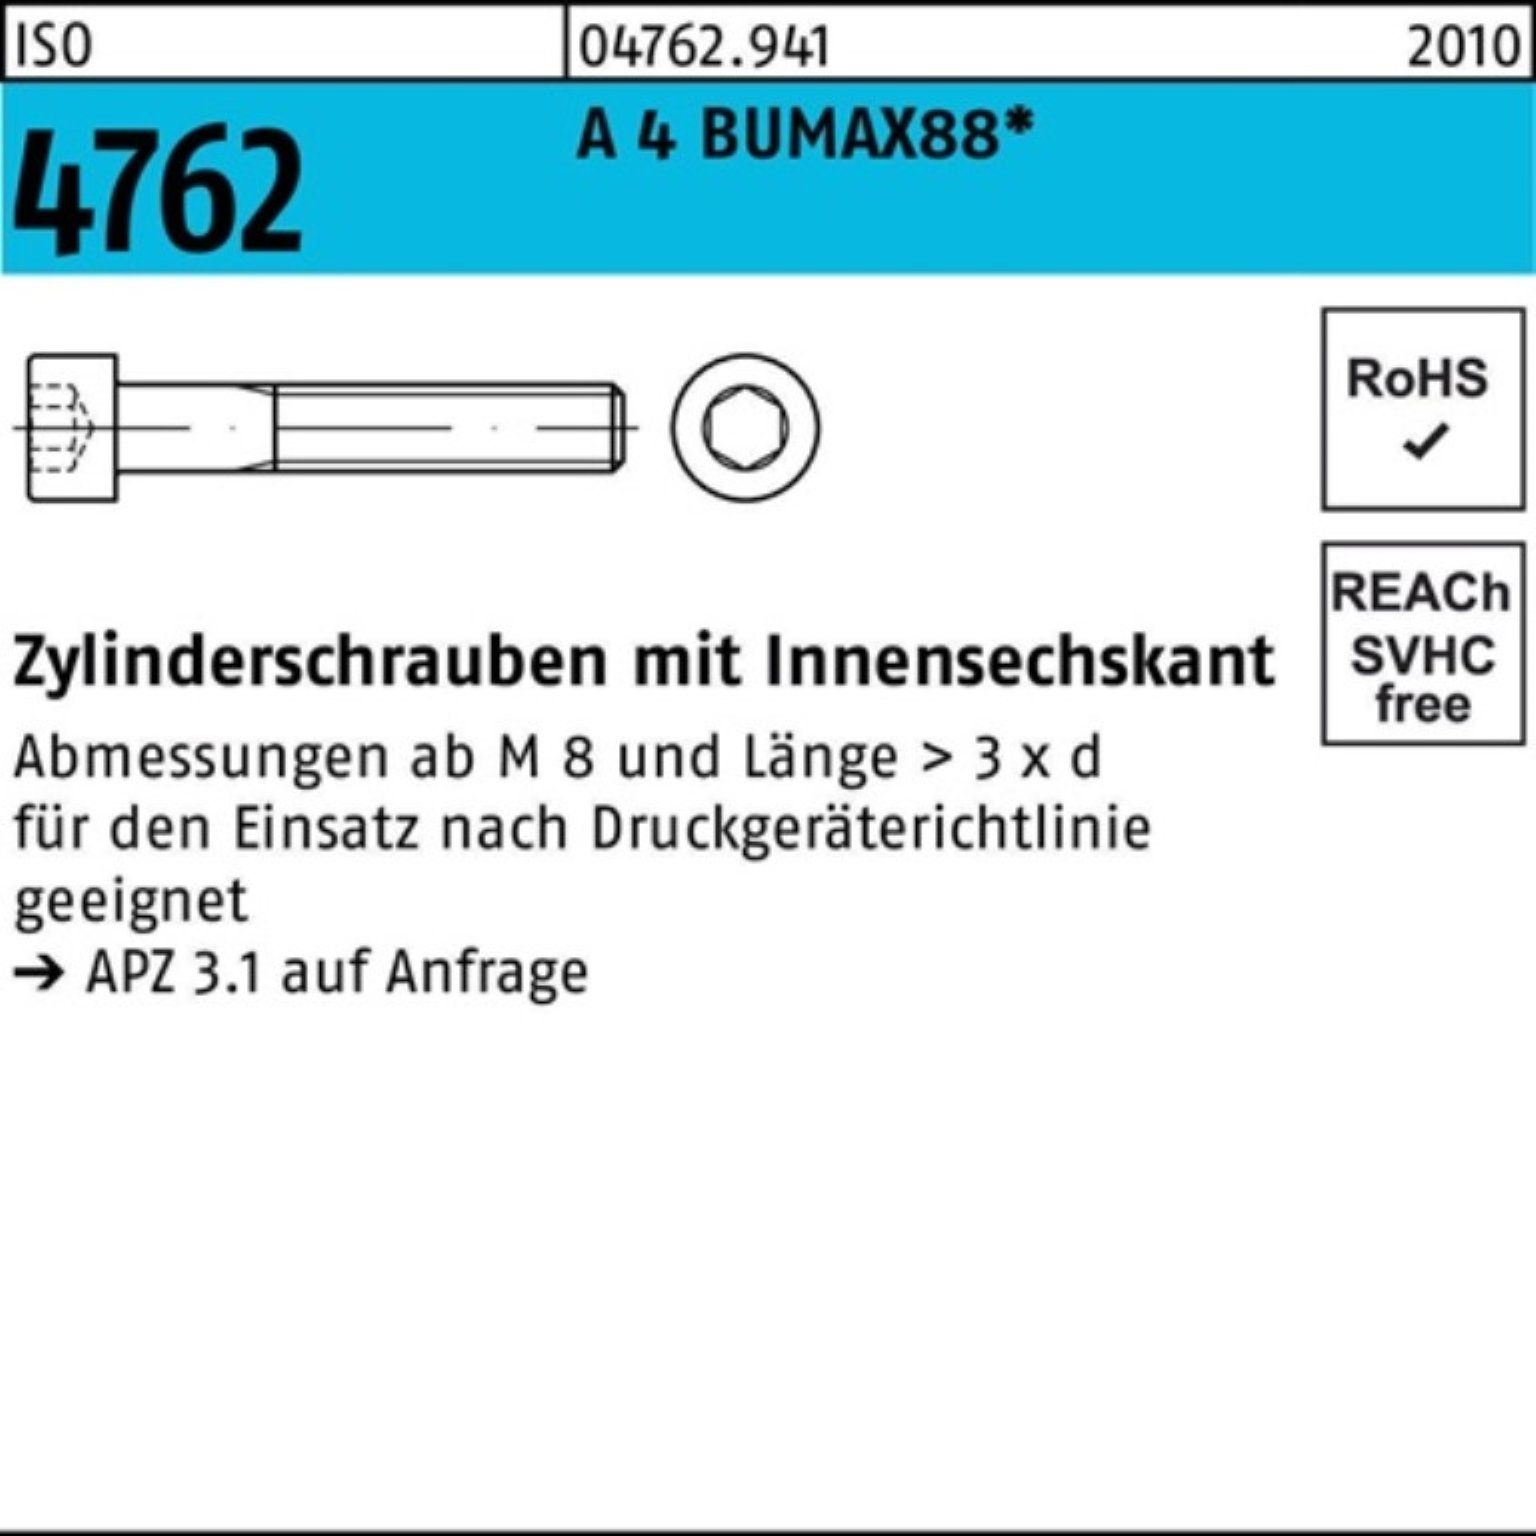 Bufab Zylinderschraube 100er Pack Zylinderschraube ISO 4762 Innen-6kt M12x 30 A 4 BUMAX88 25